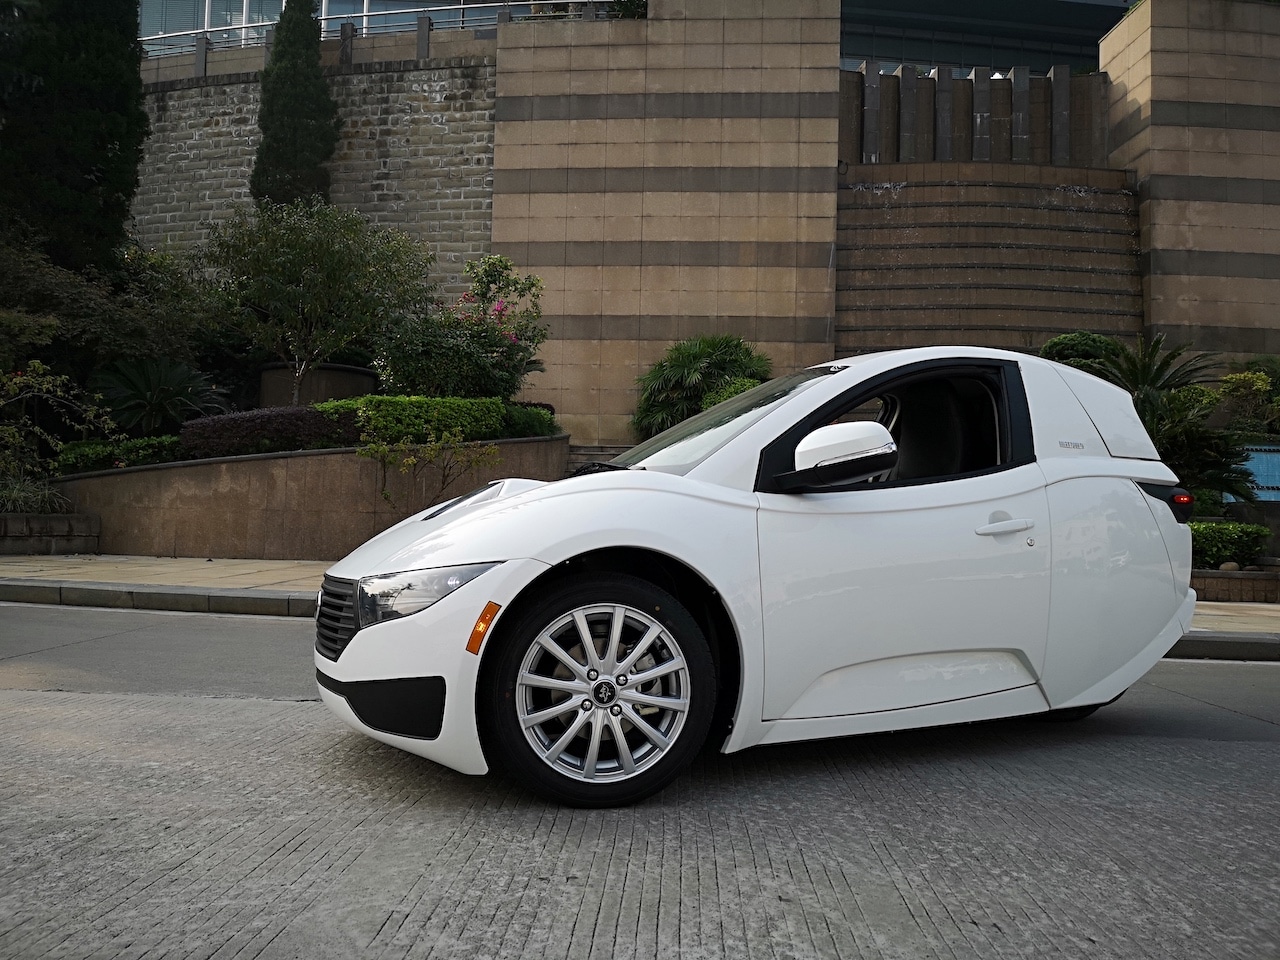 Corvette Inspiration for Solo 3-Wheel EV